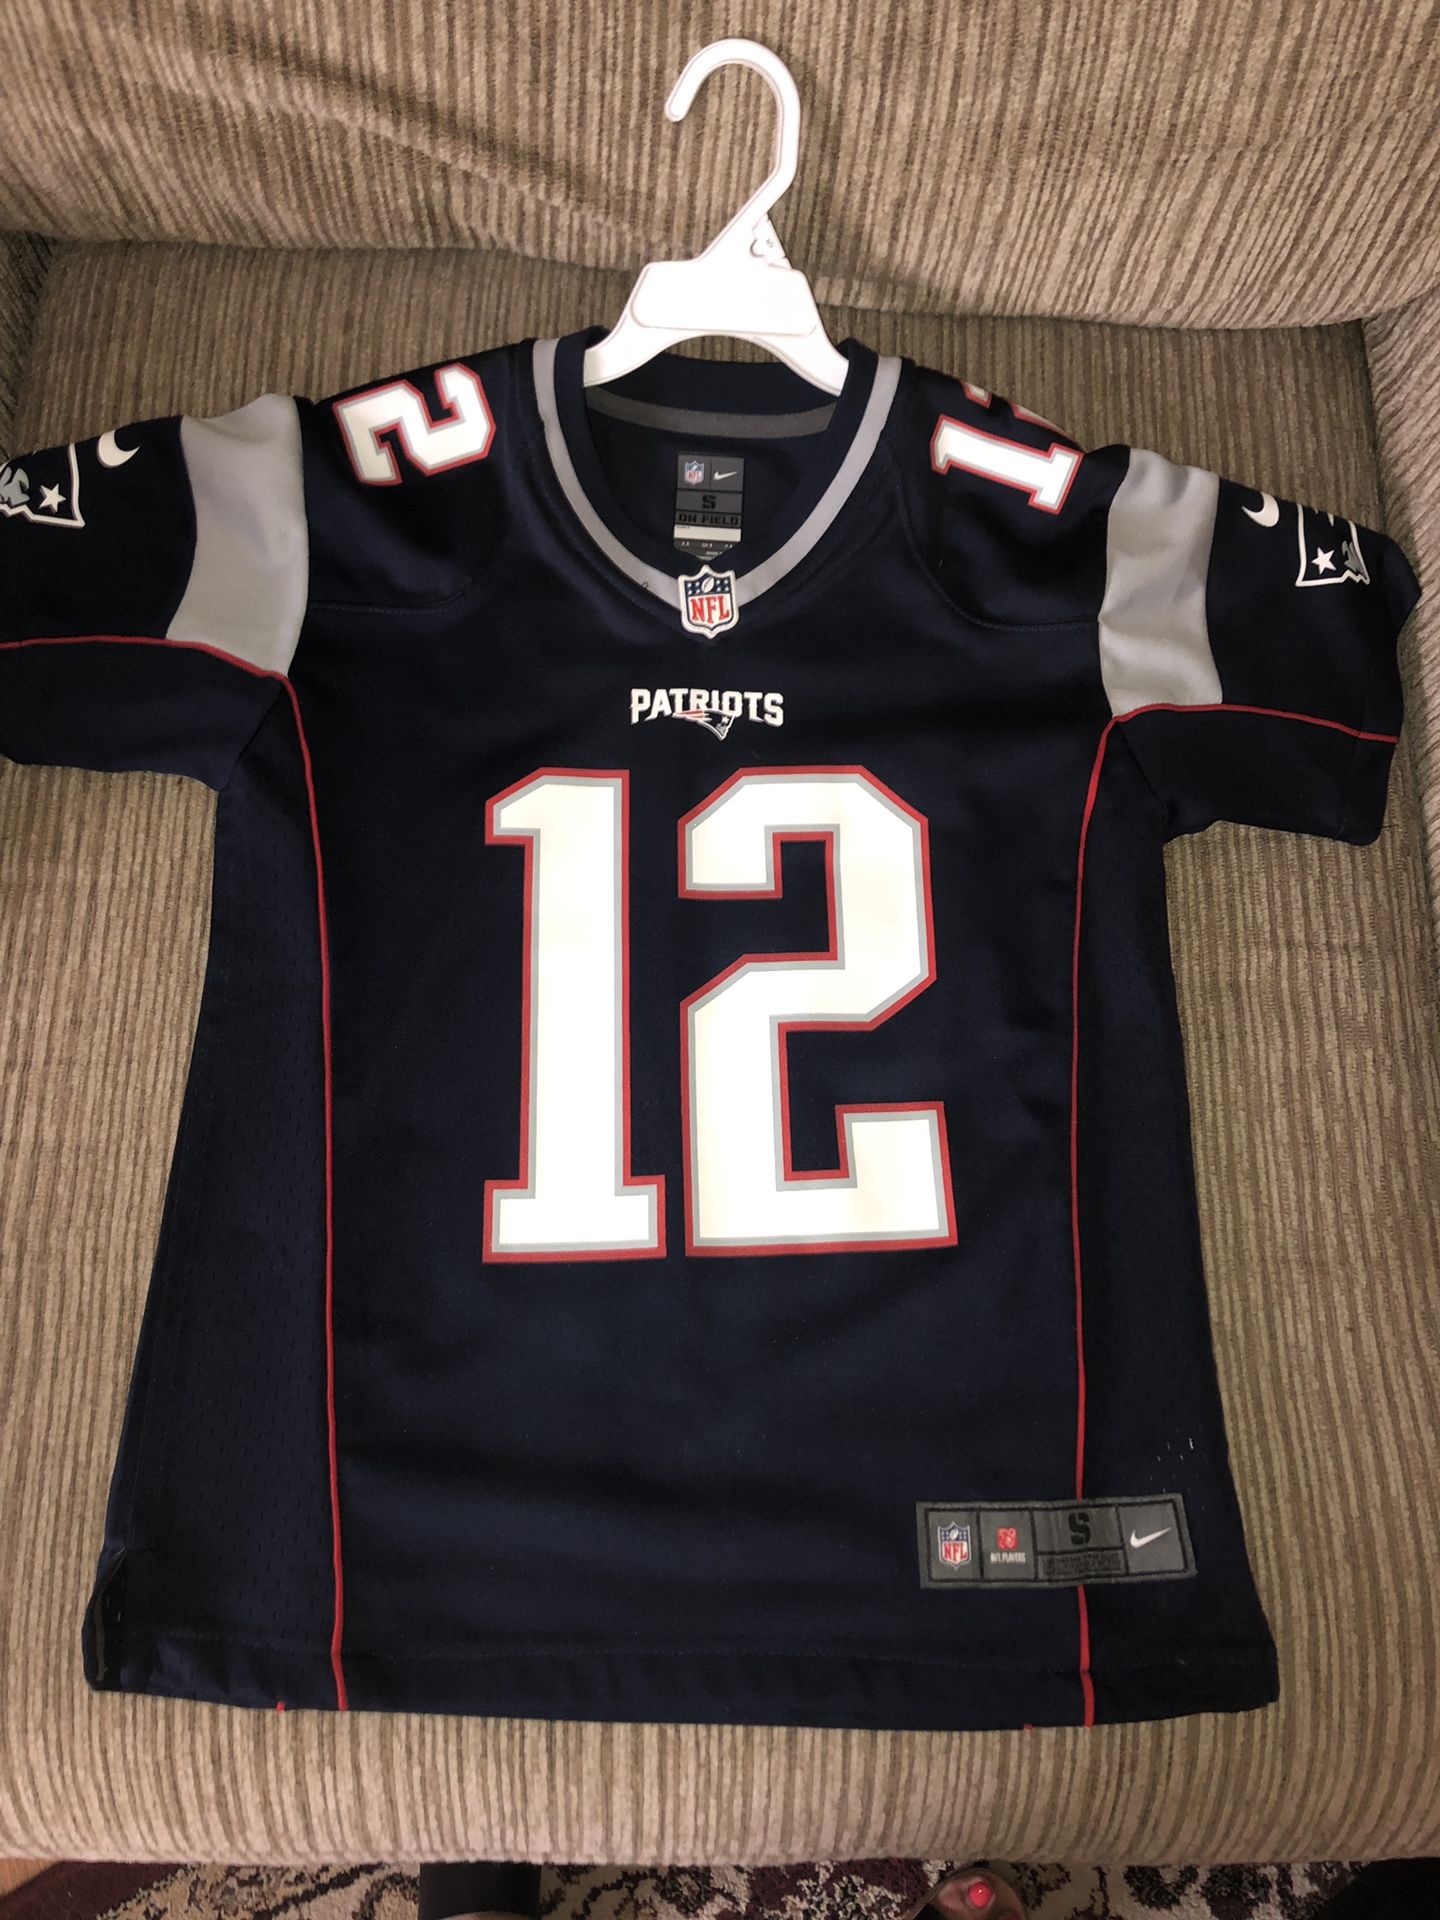 Brady jersey, authentic NFL, size S